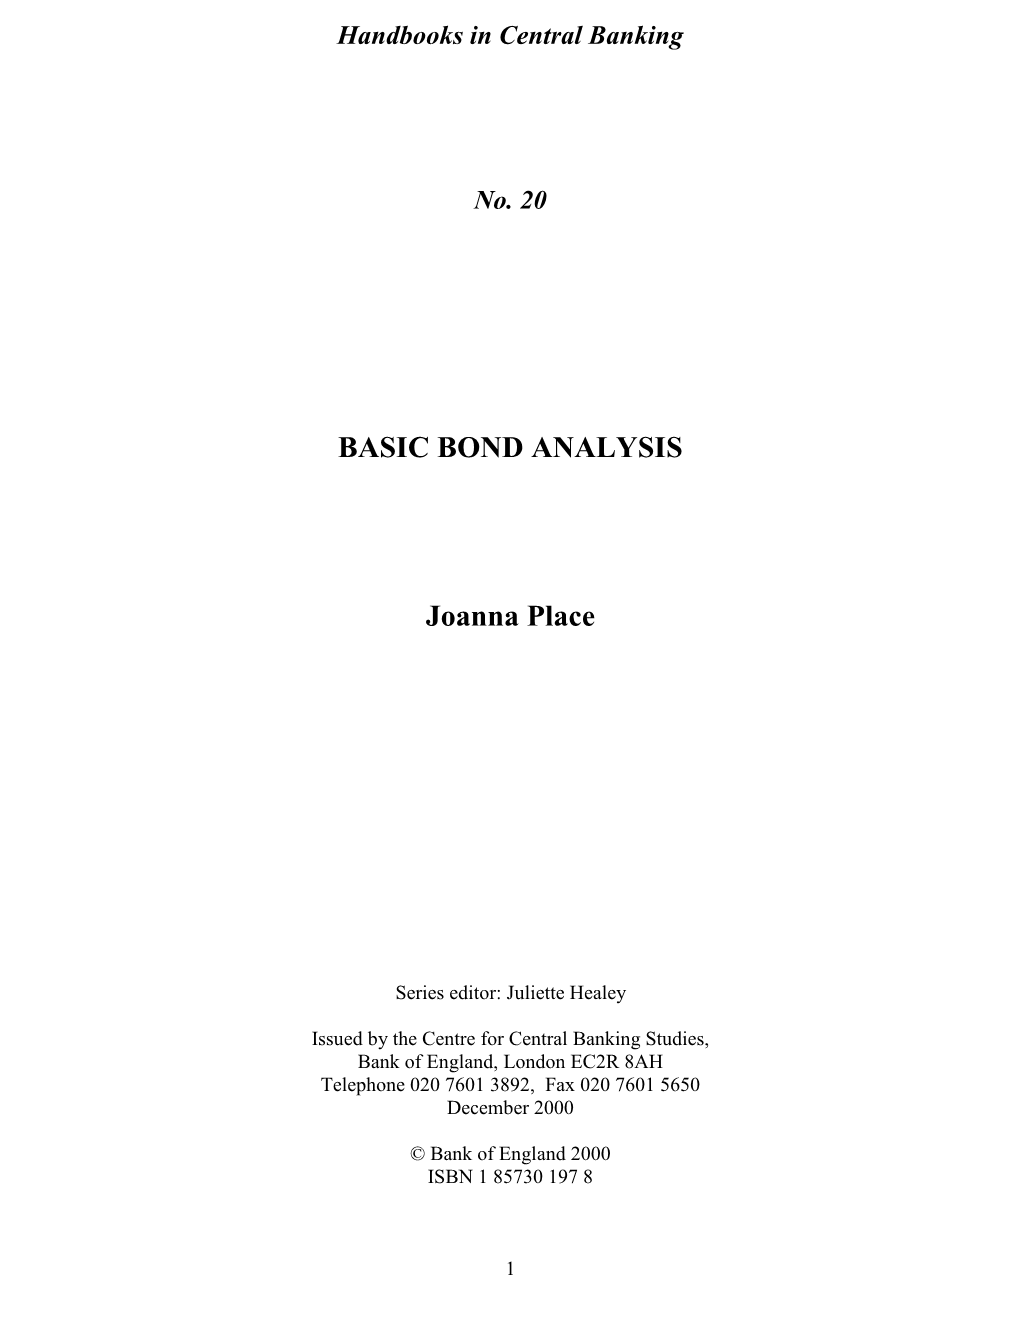 BASIC BOND ANALYSIS Joanna Place